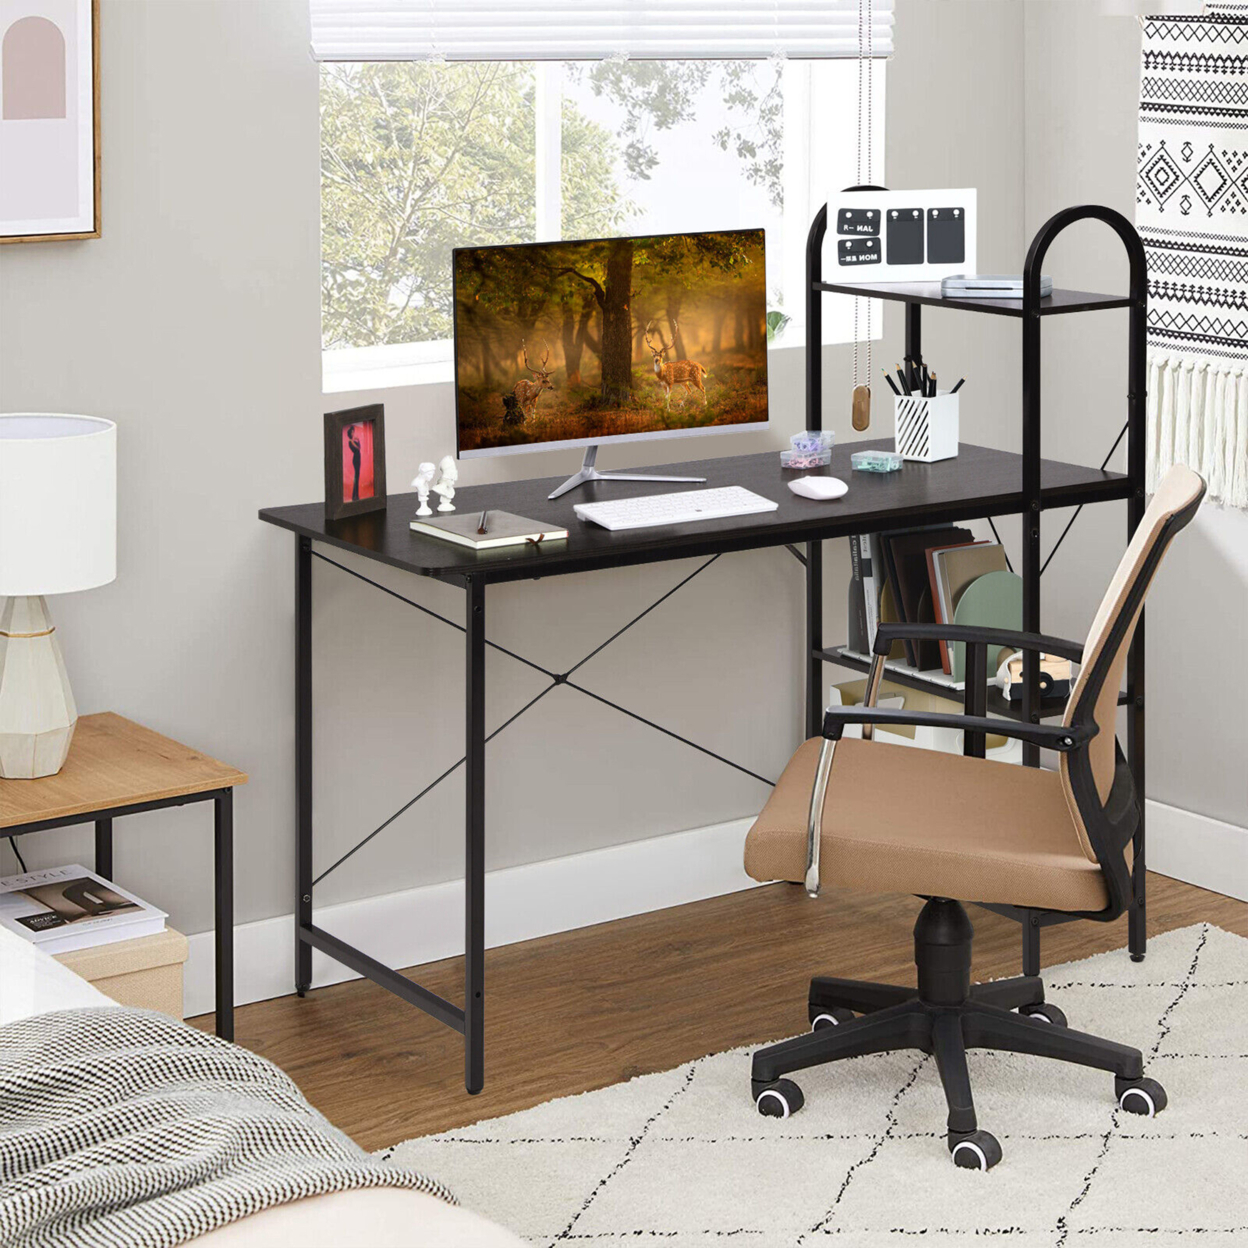 Reversible Computer Desk Study Workstation Home Office 4-tier Bookshelf